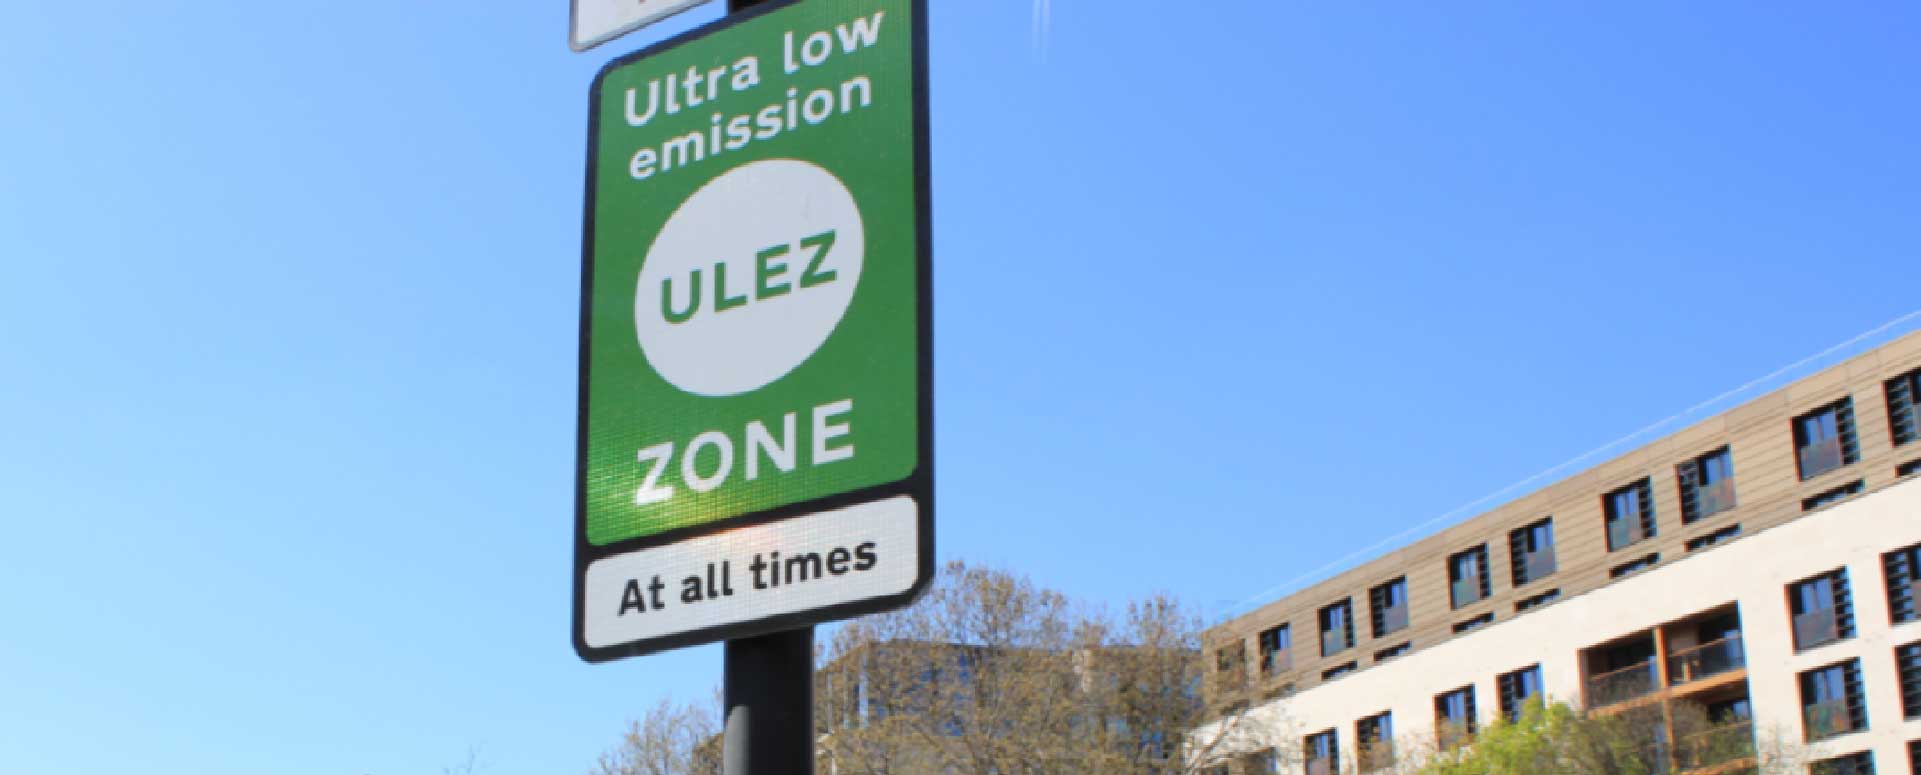 ULEZ London Road Sign